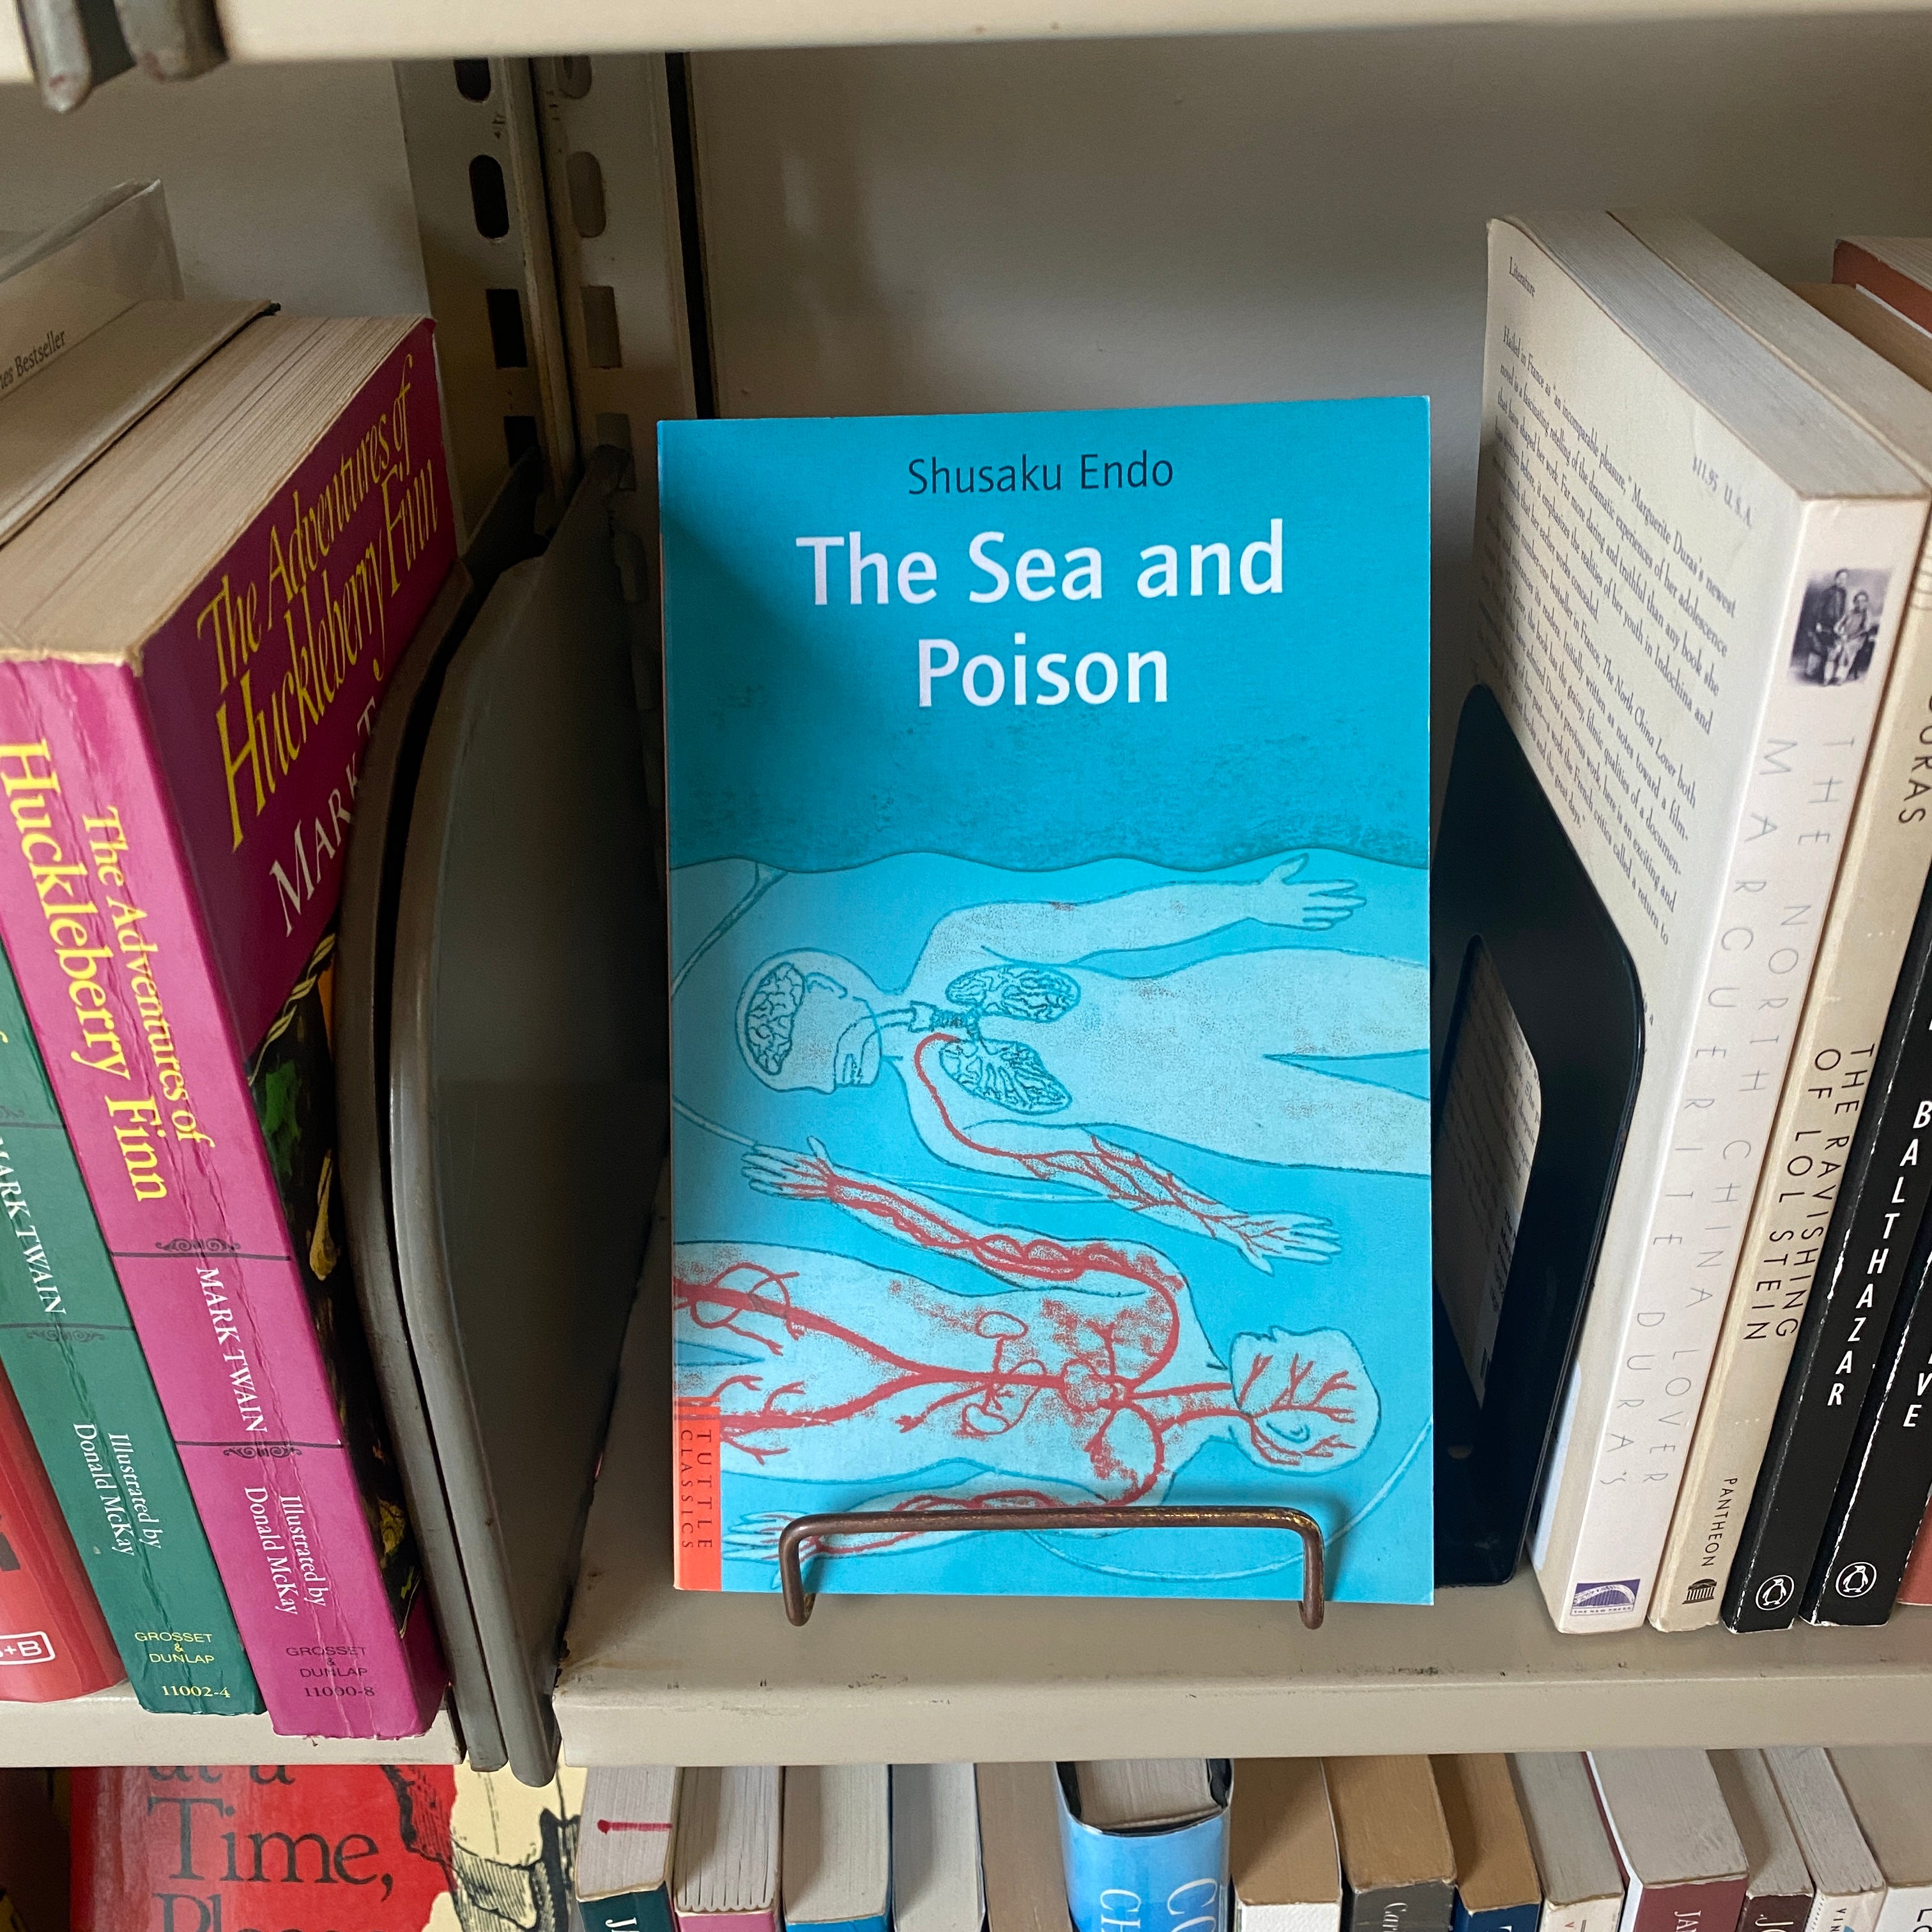 The Sea and Poison by Shusaku Endo